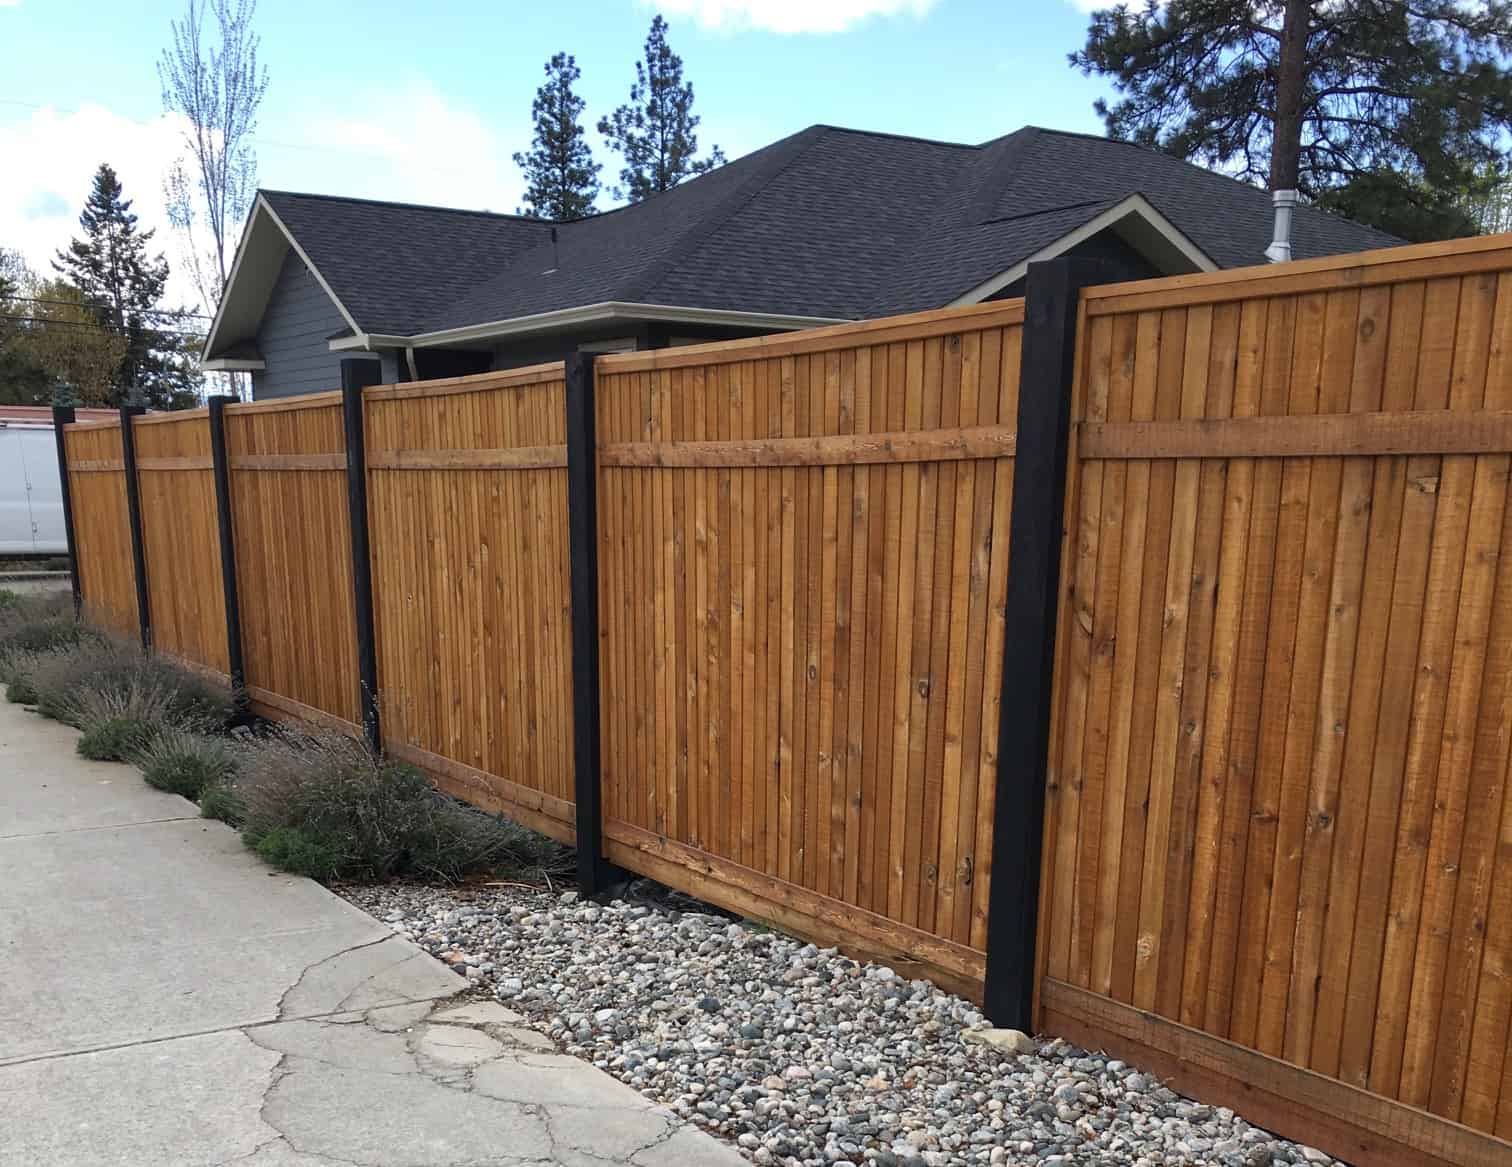 Cheap Fence Panels